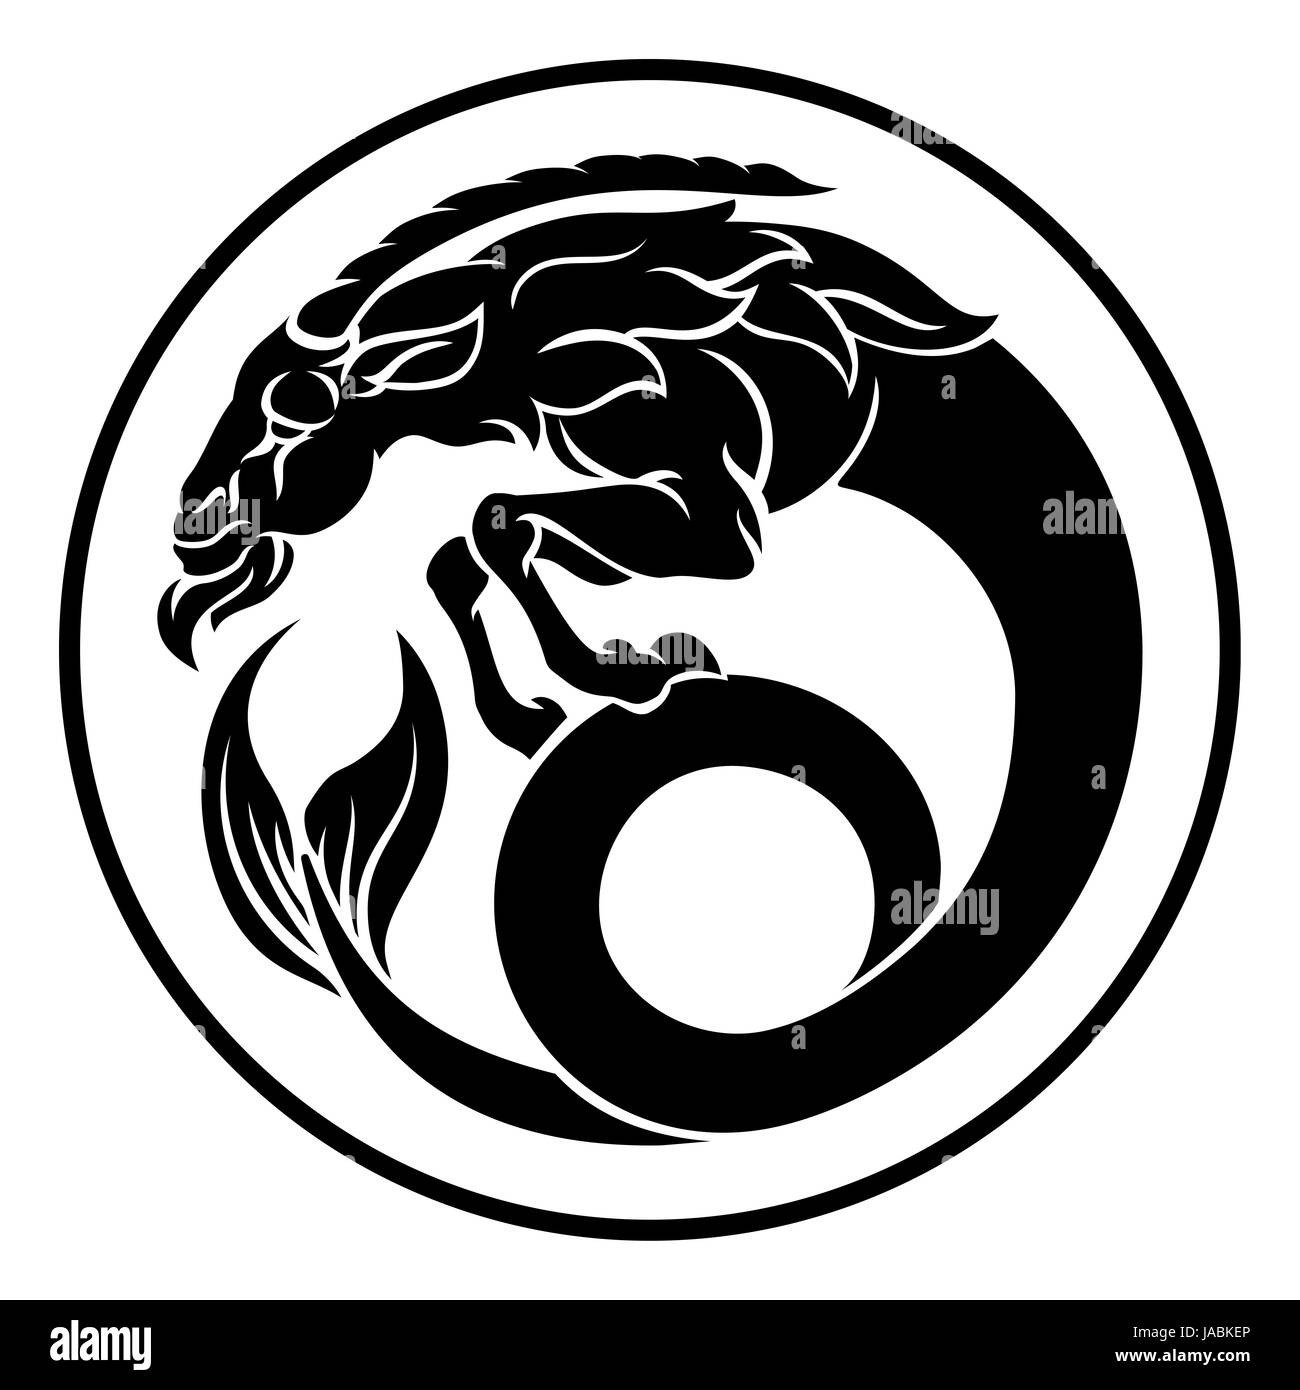 Circle Capricorn Sea Goat horoscope astrology zodiac sign icon Stock Photo